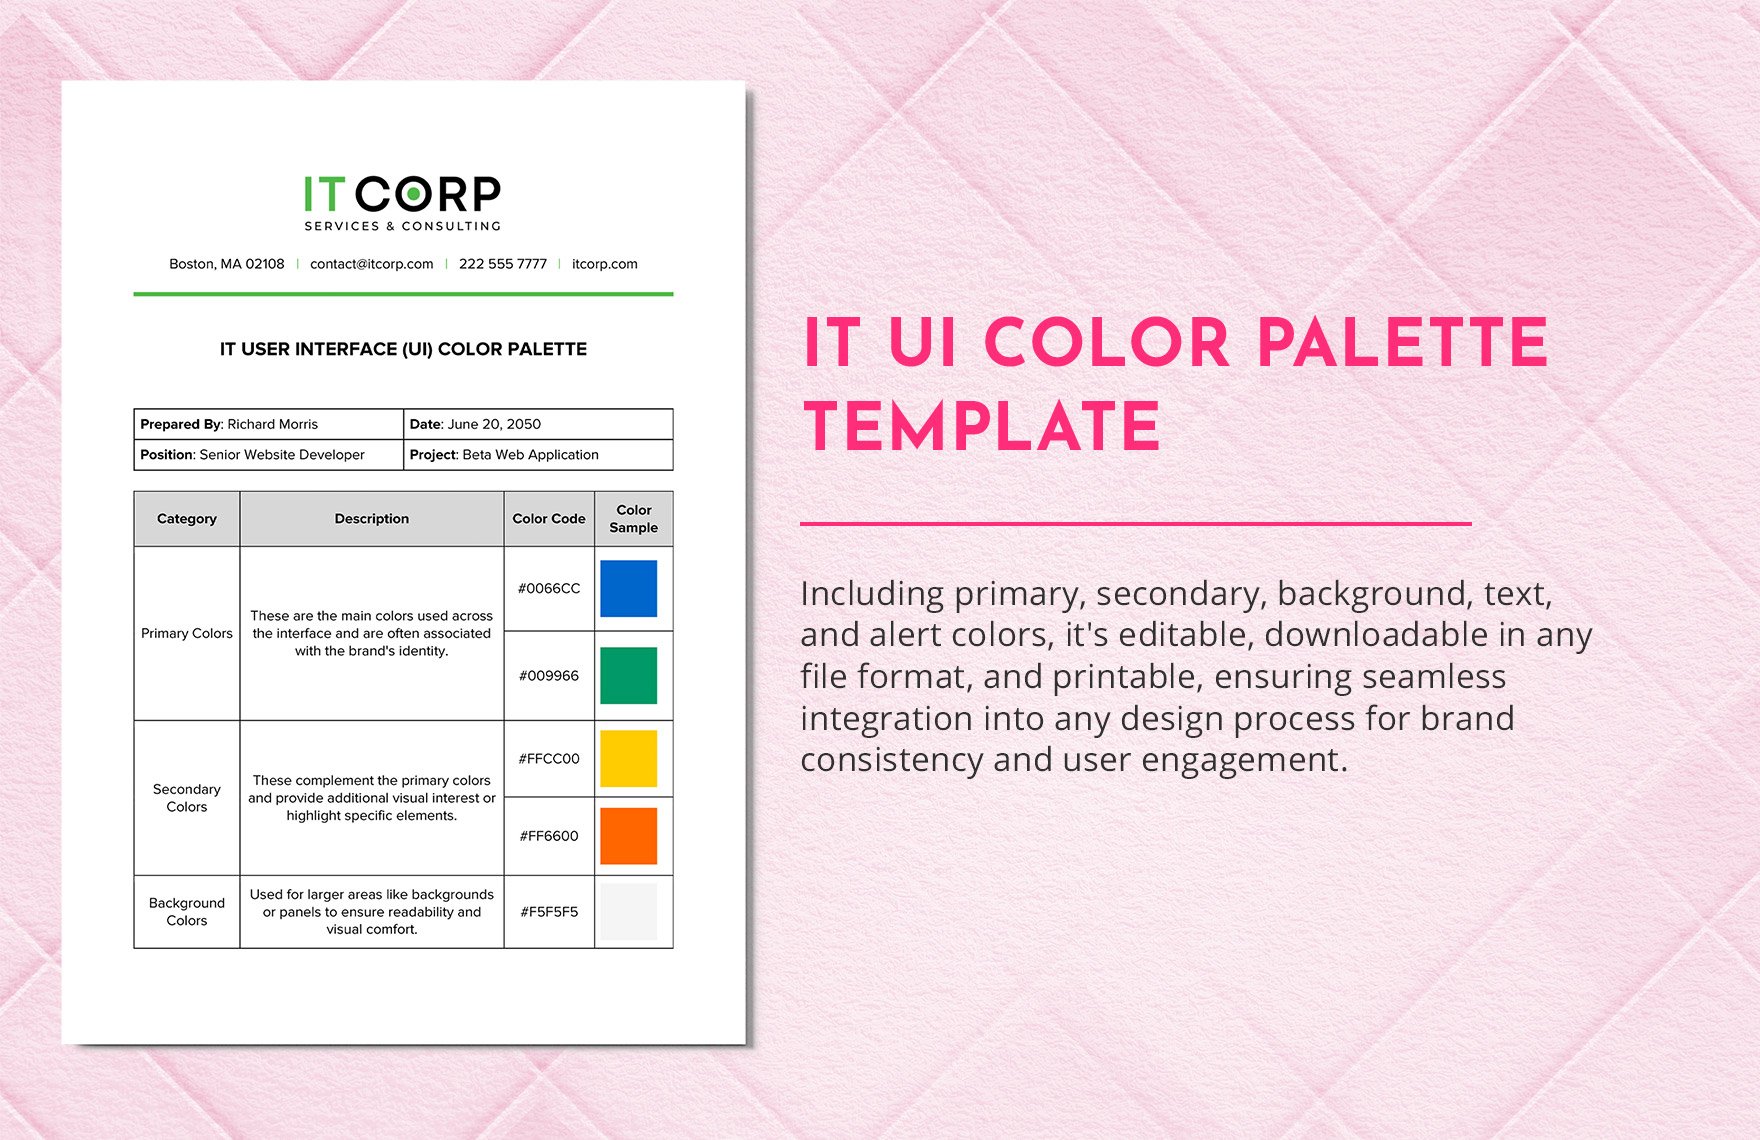 IT UI Color Palette Template in Word, Google Docs, PDF